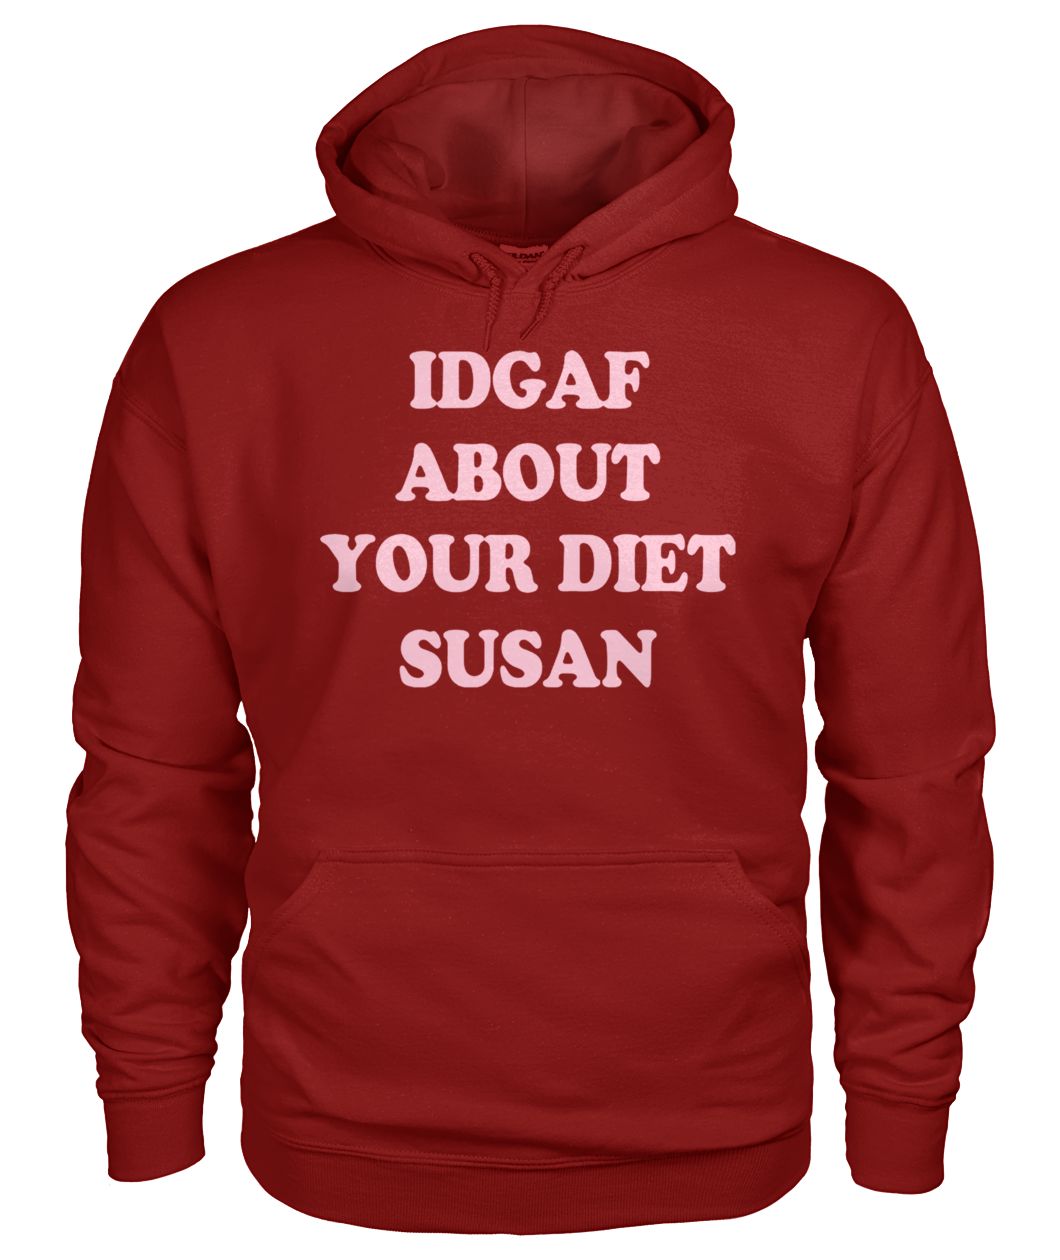 IDGAF about your diet susan gildan hoodie